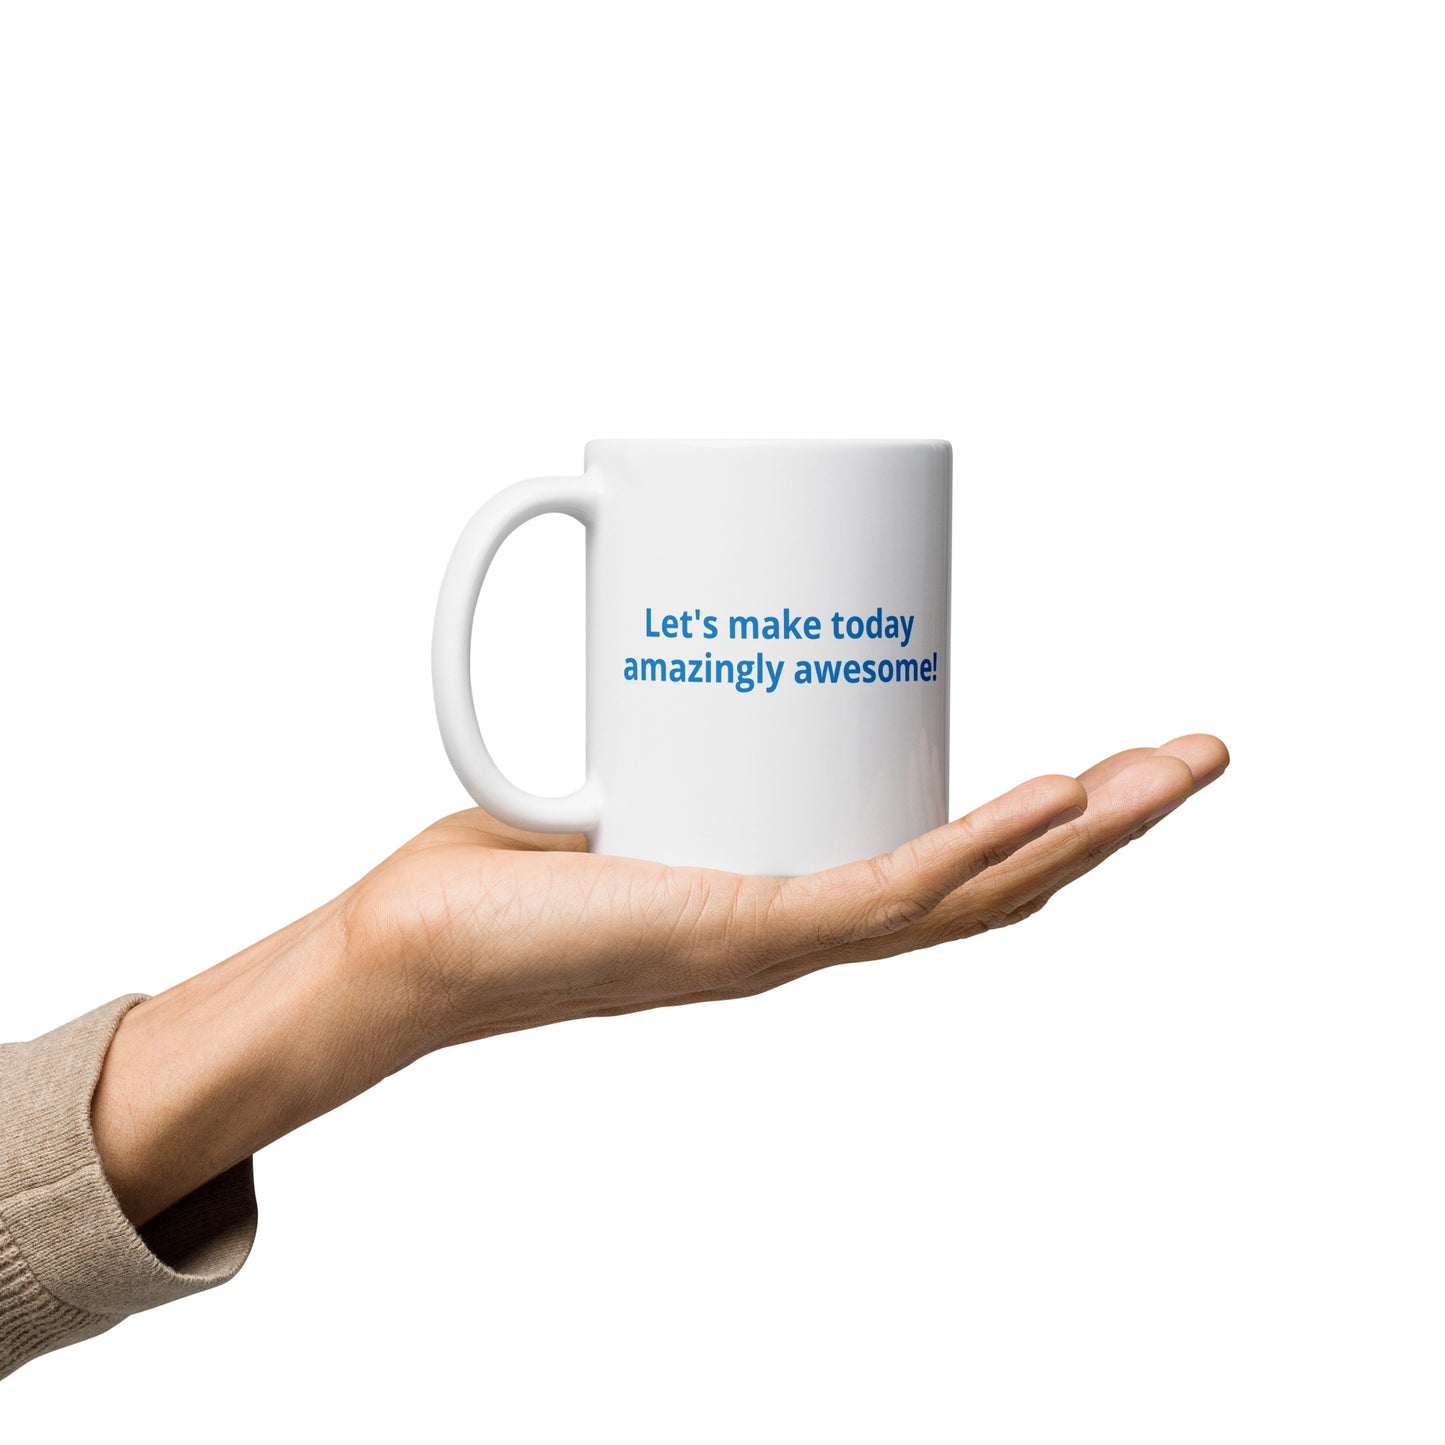 Let's make today amazingly awesome! - White glossy mug